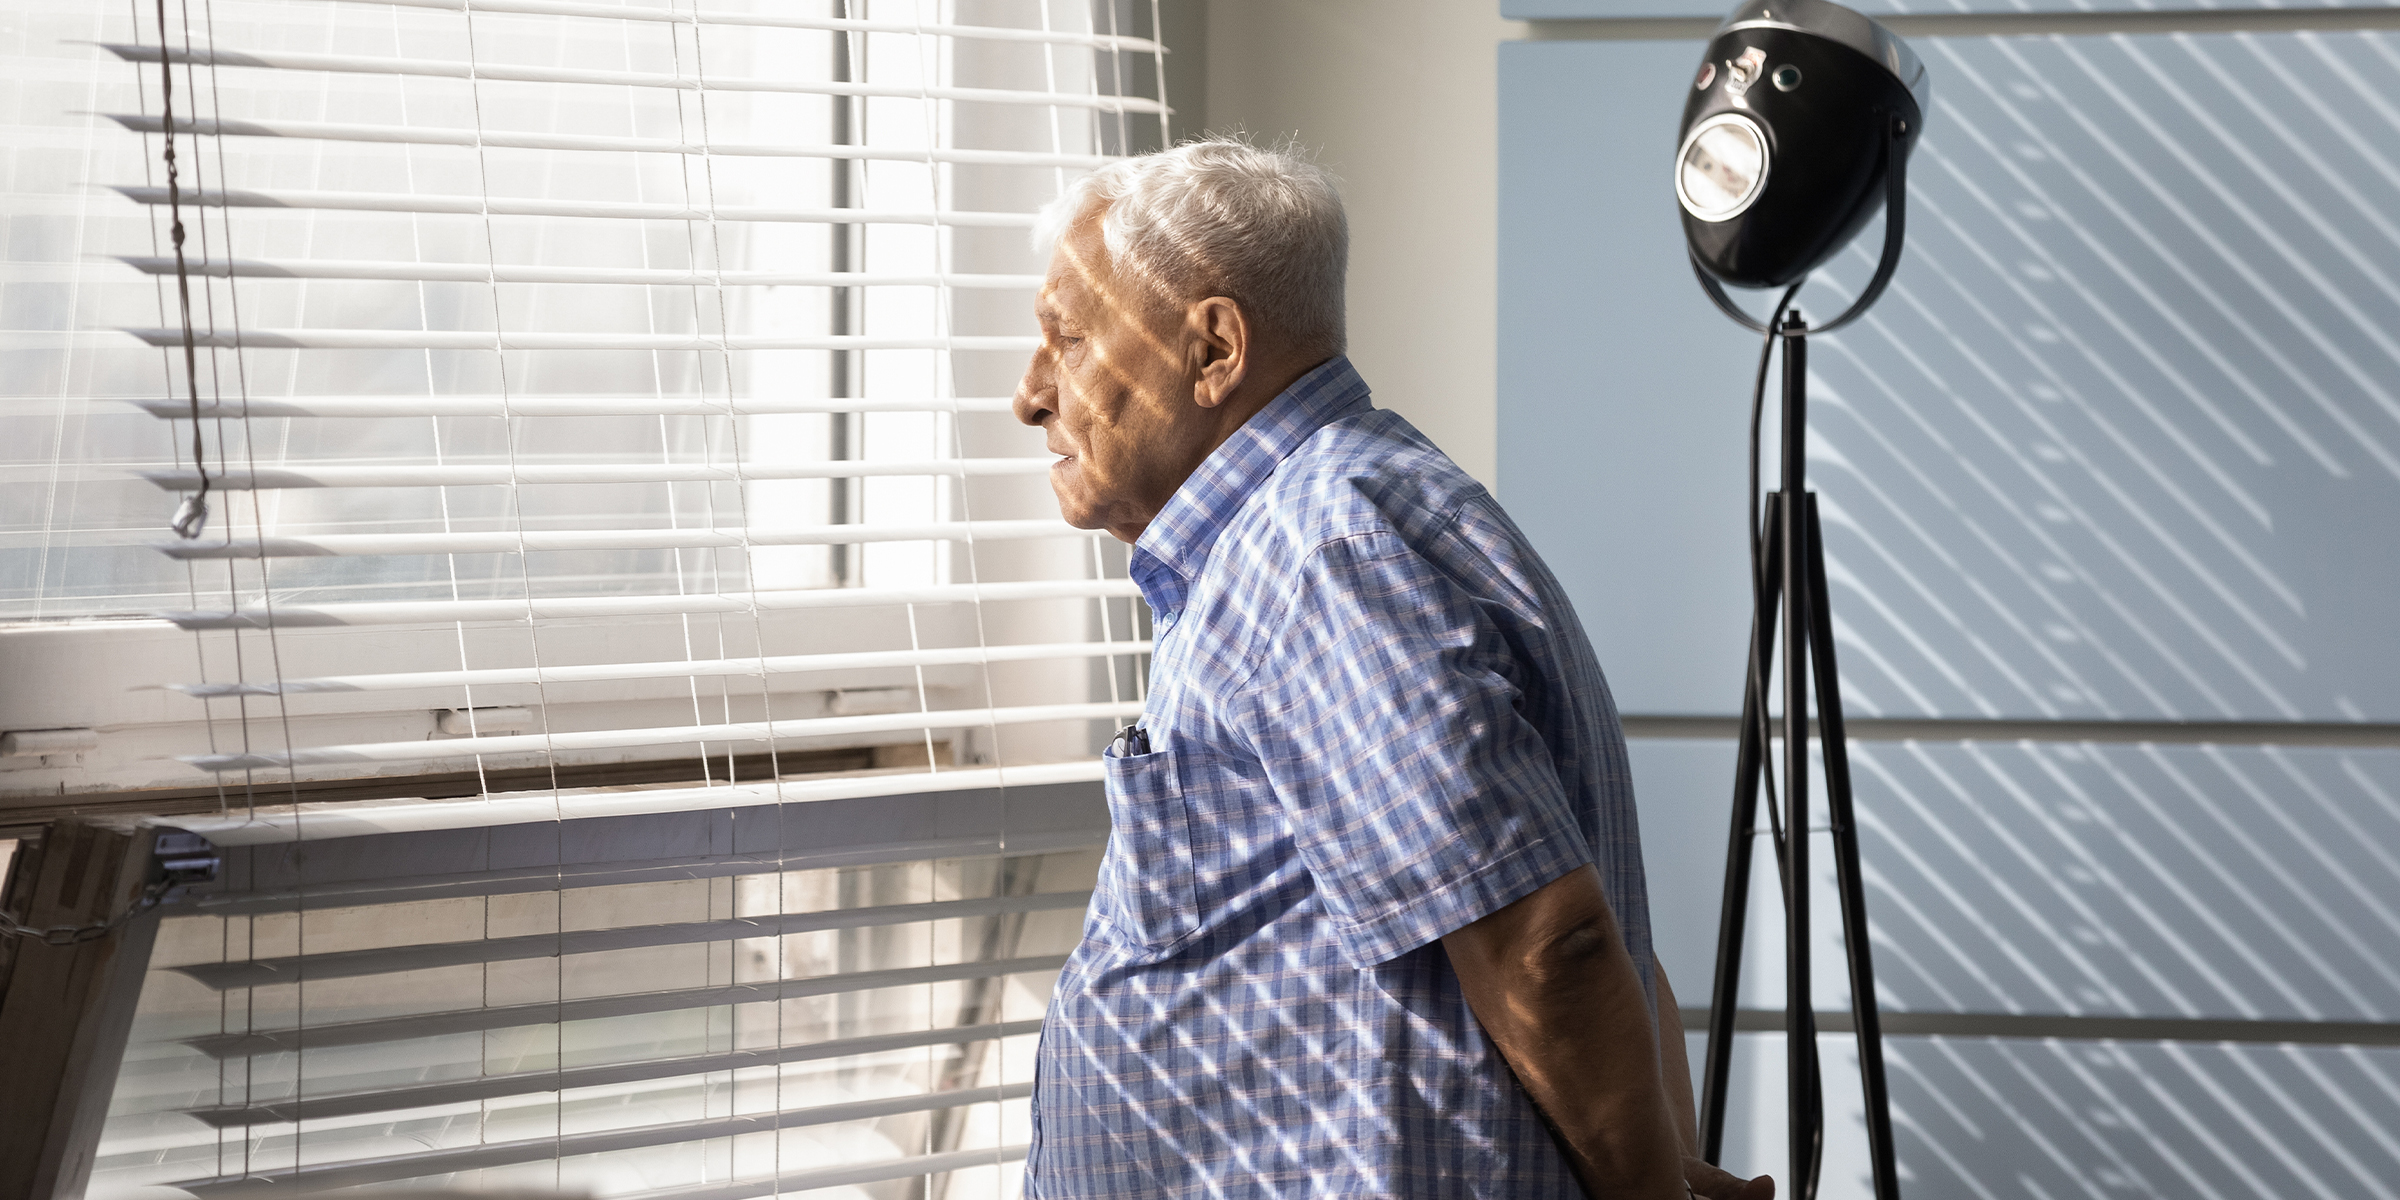 A sad grandfather | Source: Shutterstock